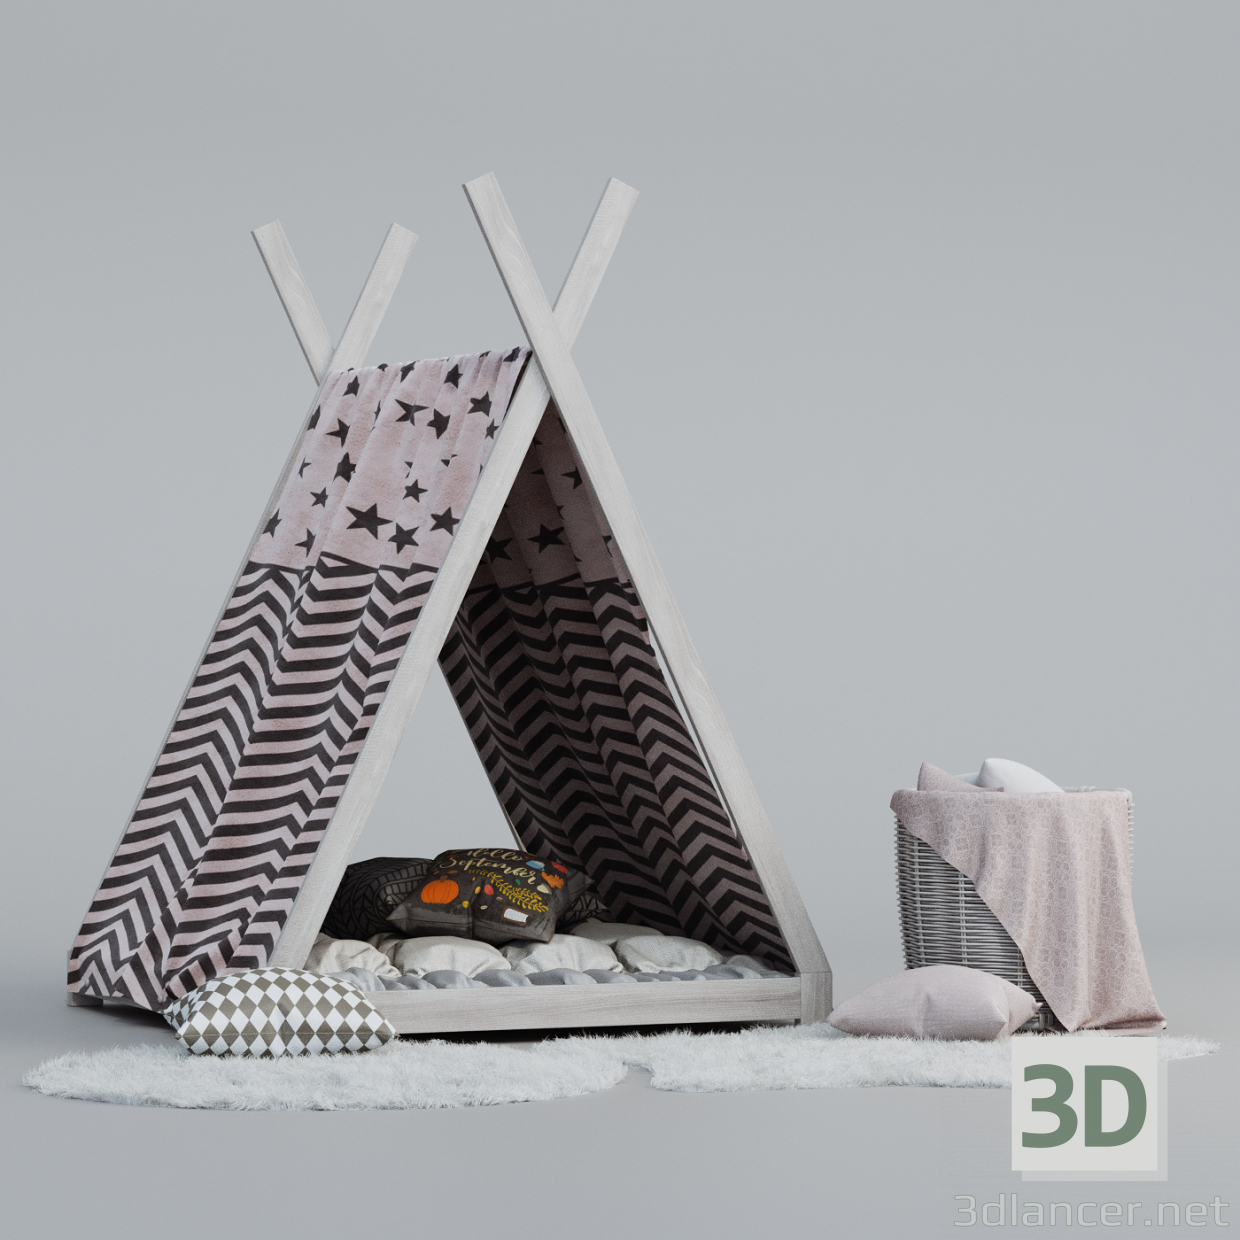 3d Children's Wigwam and Decor Set model buy - render